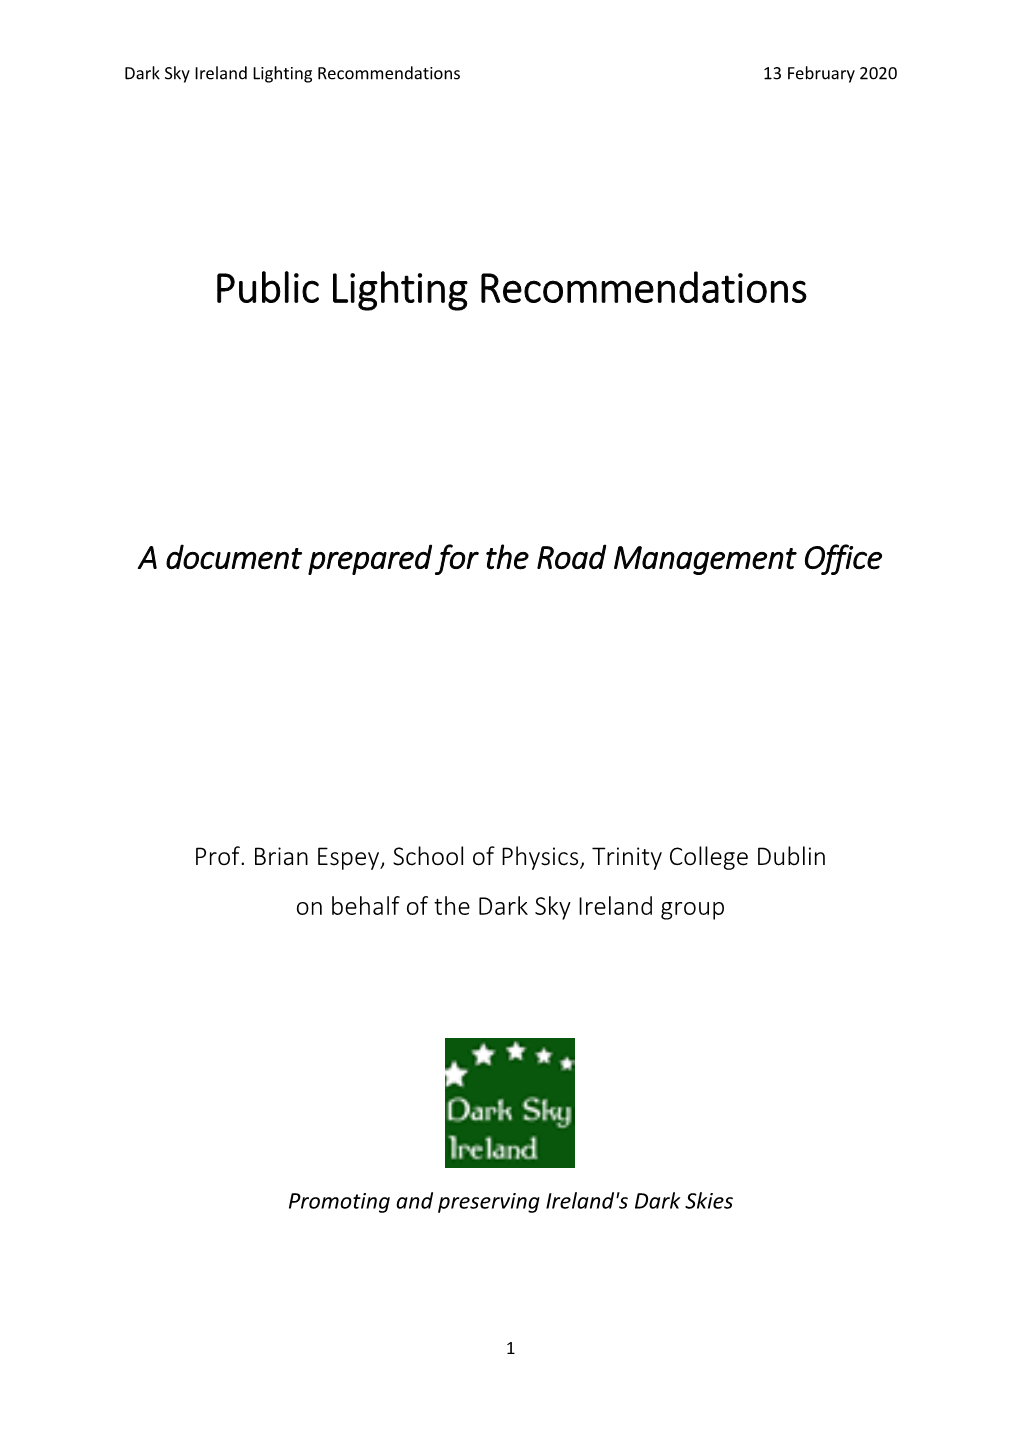 Public Lighting Recommendations